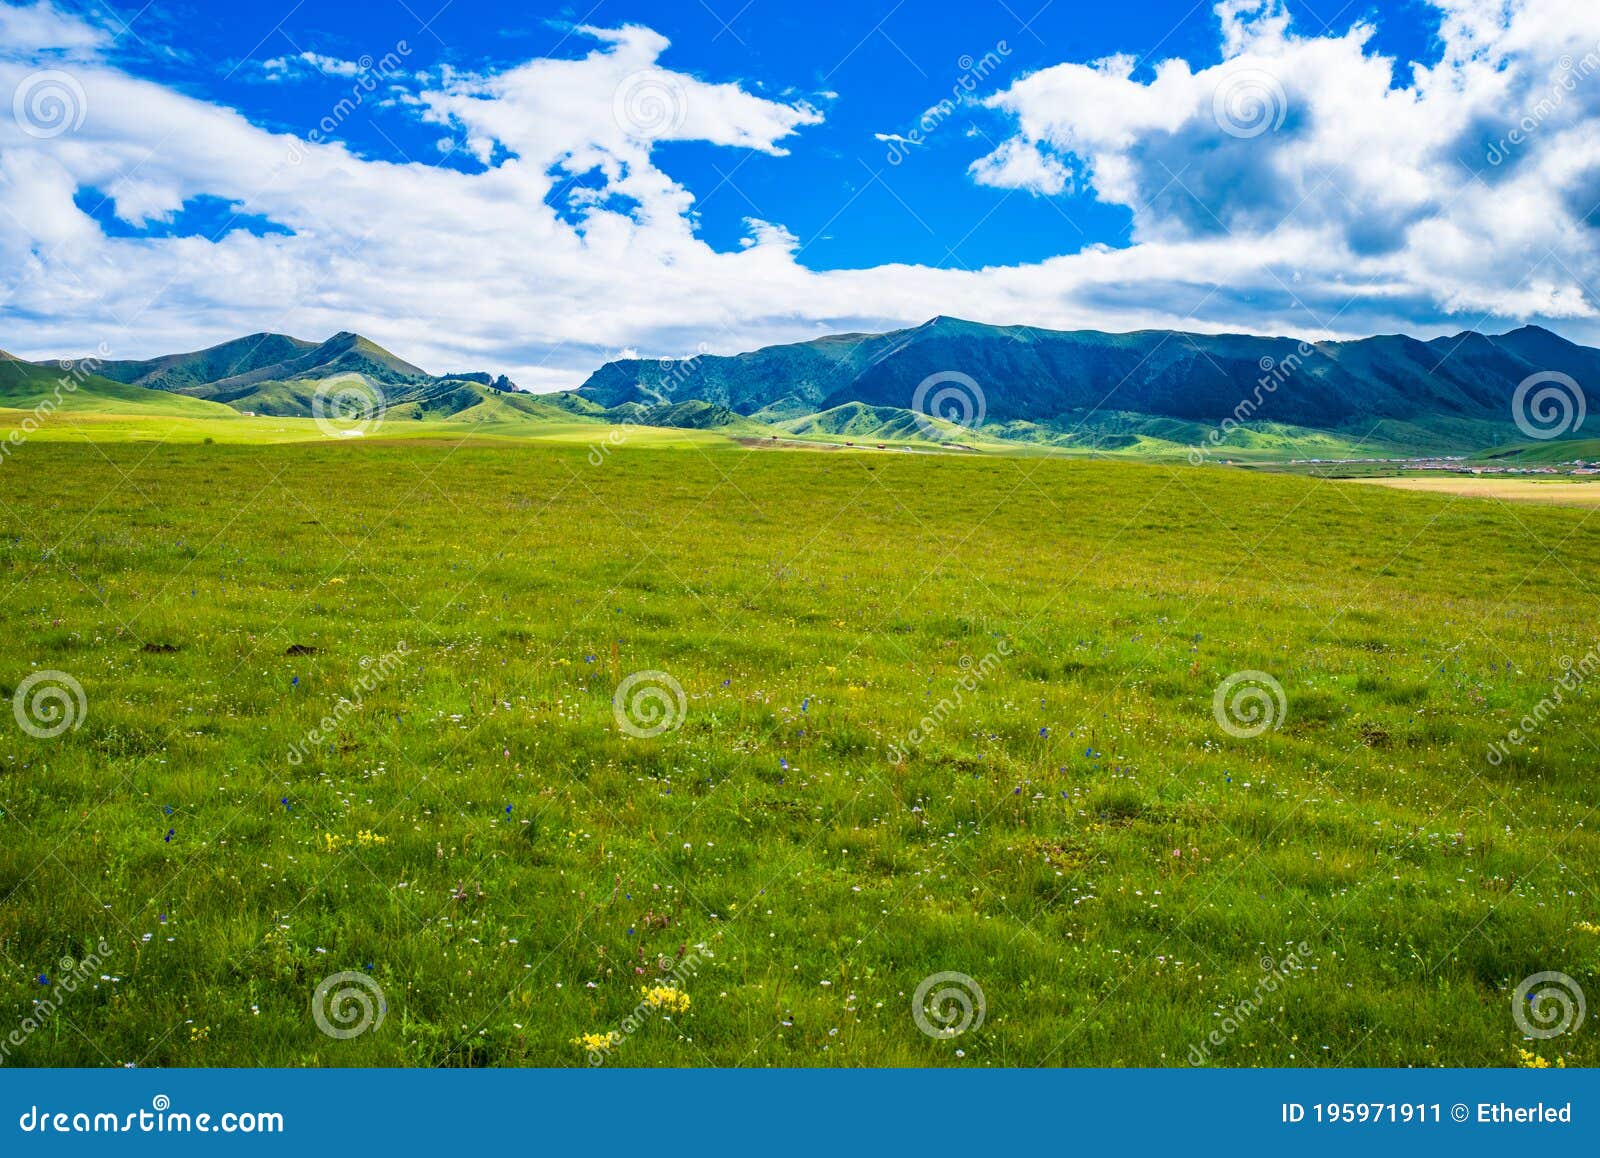 scenery of ruoergai grassland in early autumn